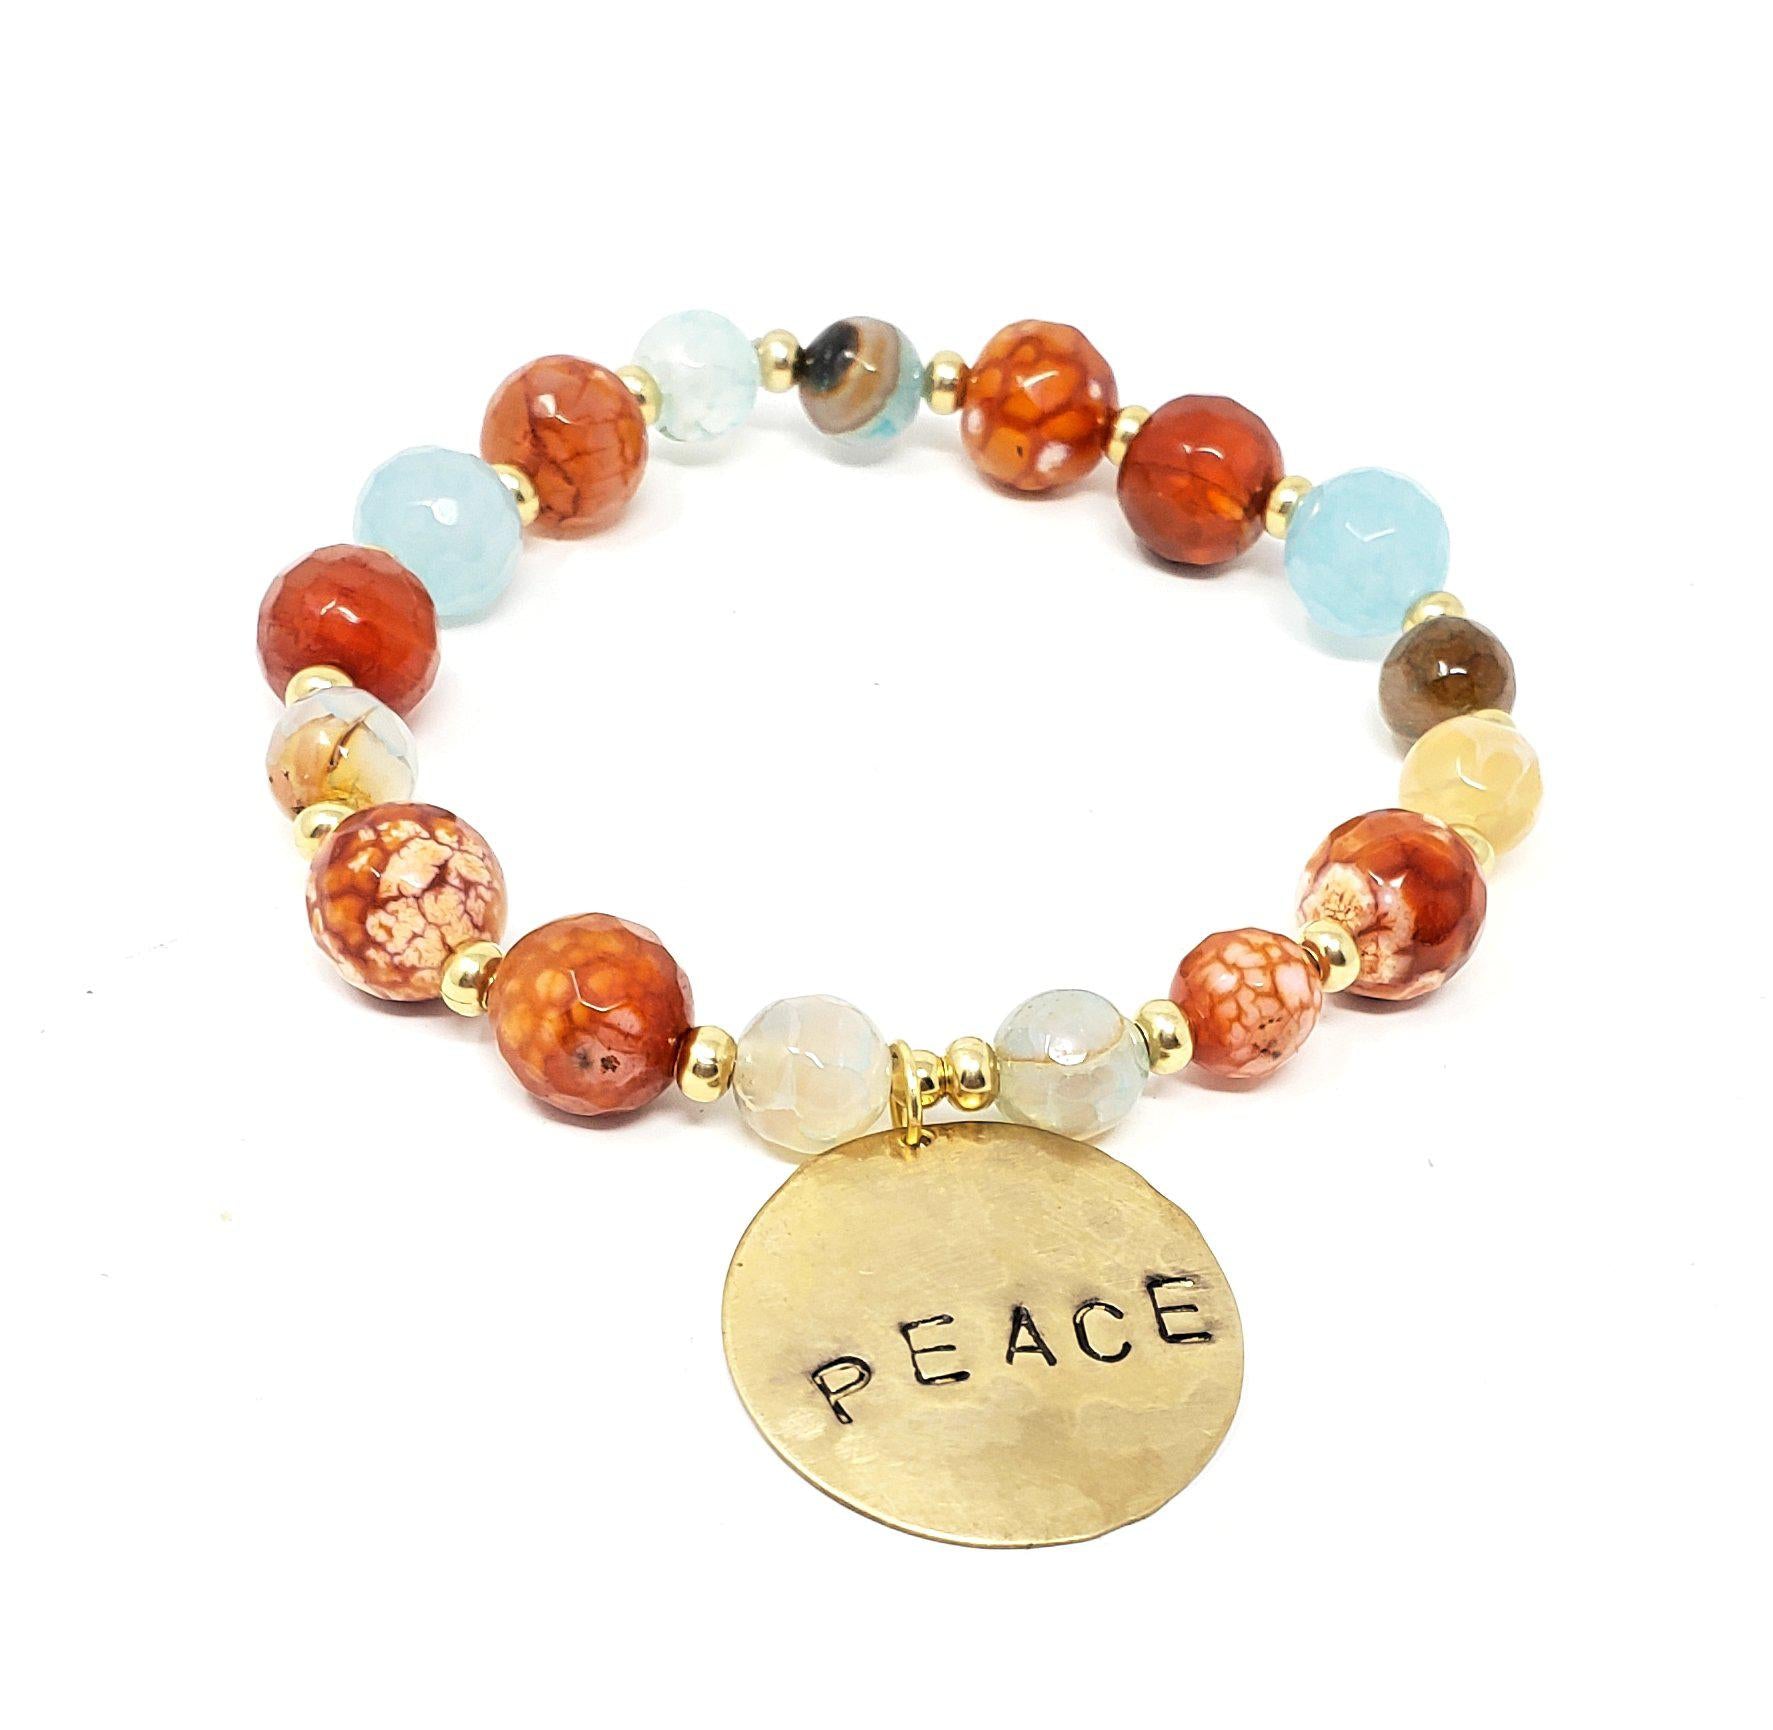 "I Am Peace" Affirmation Bracelets